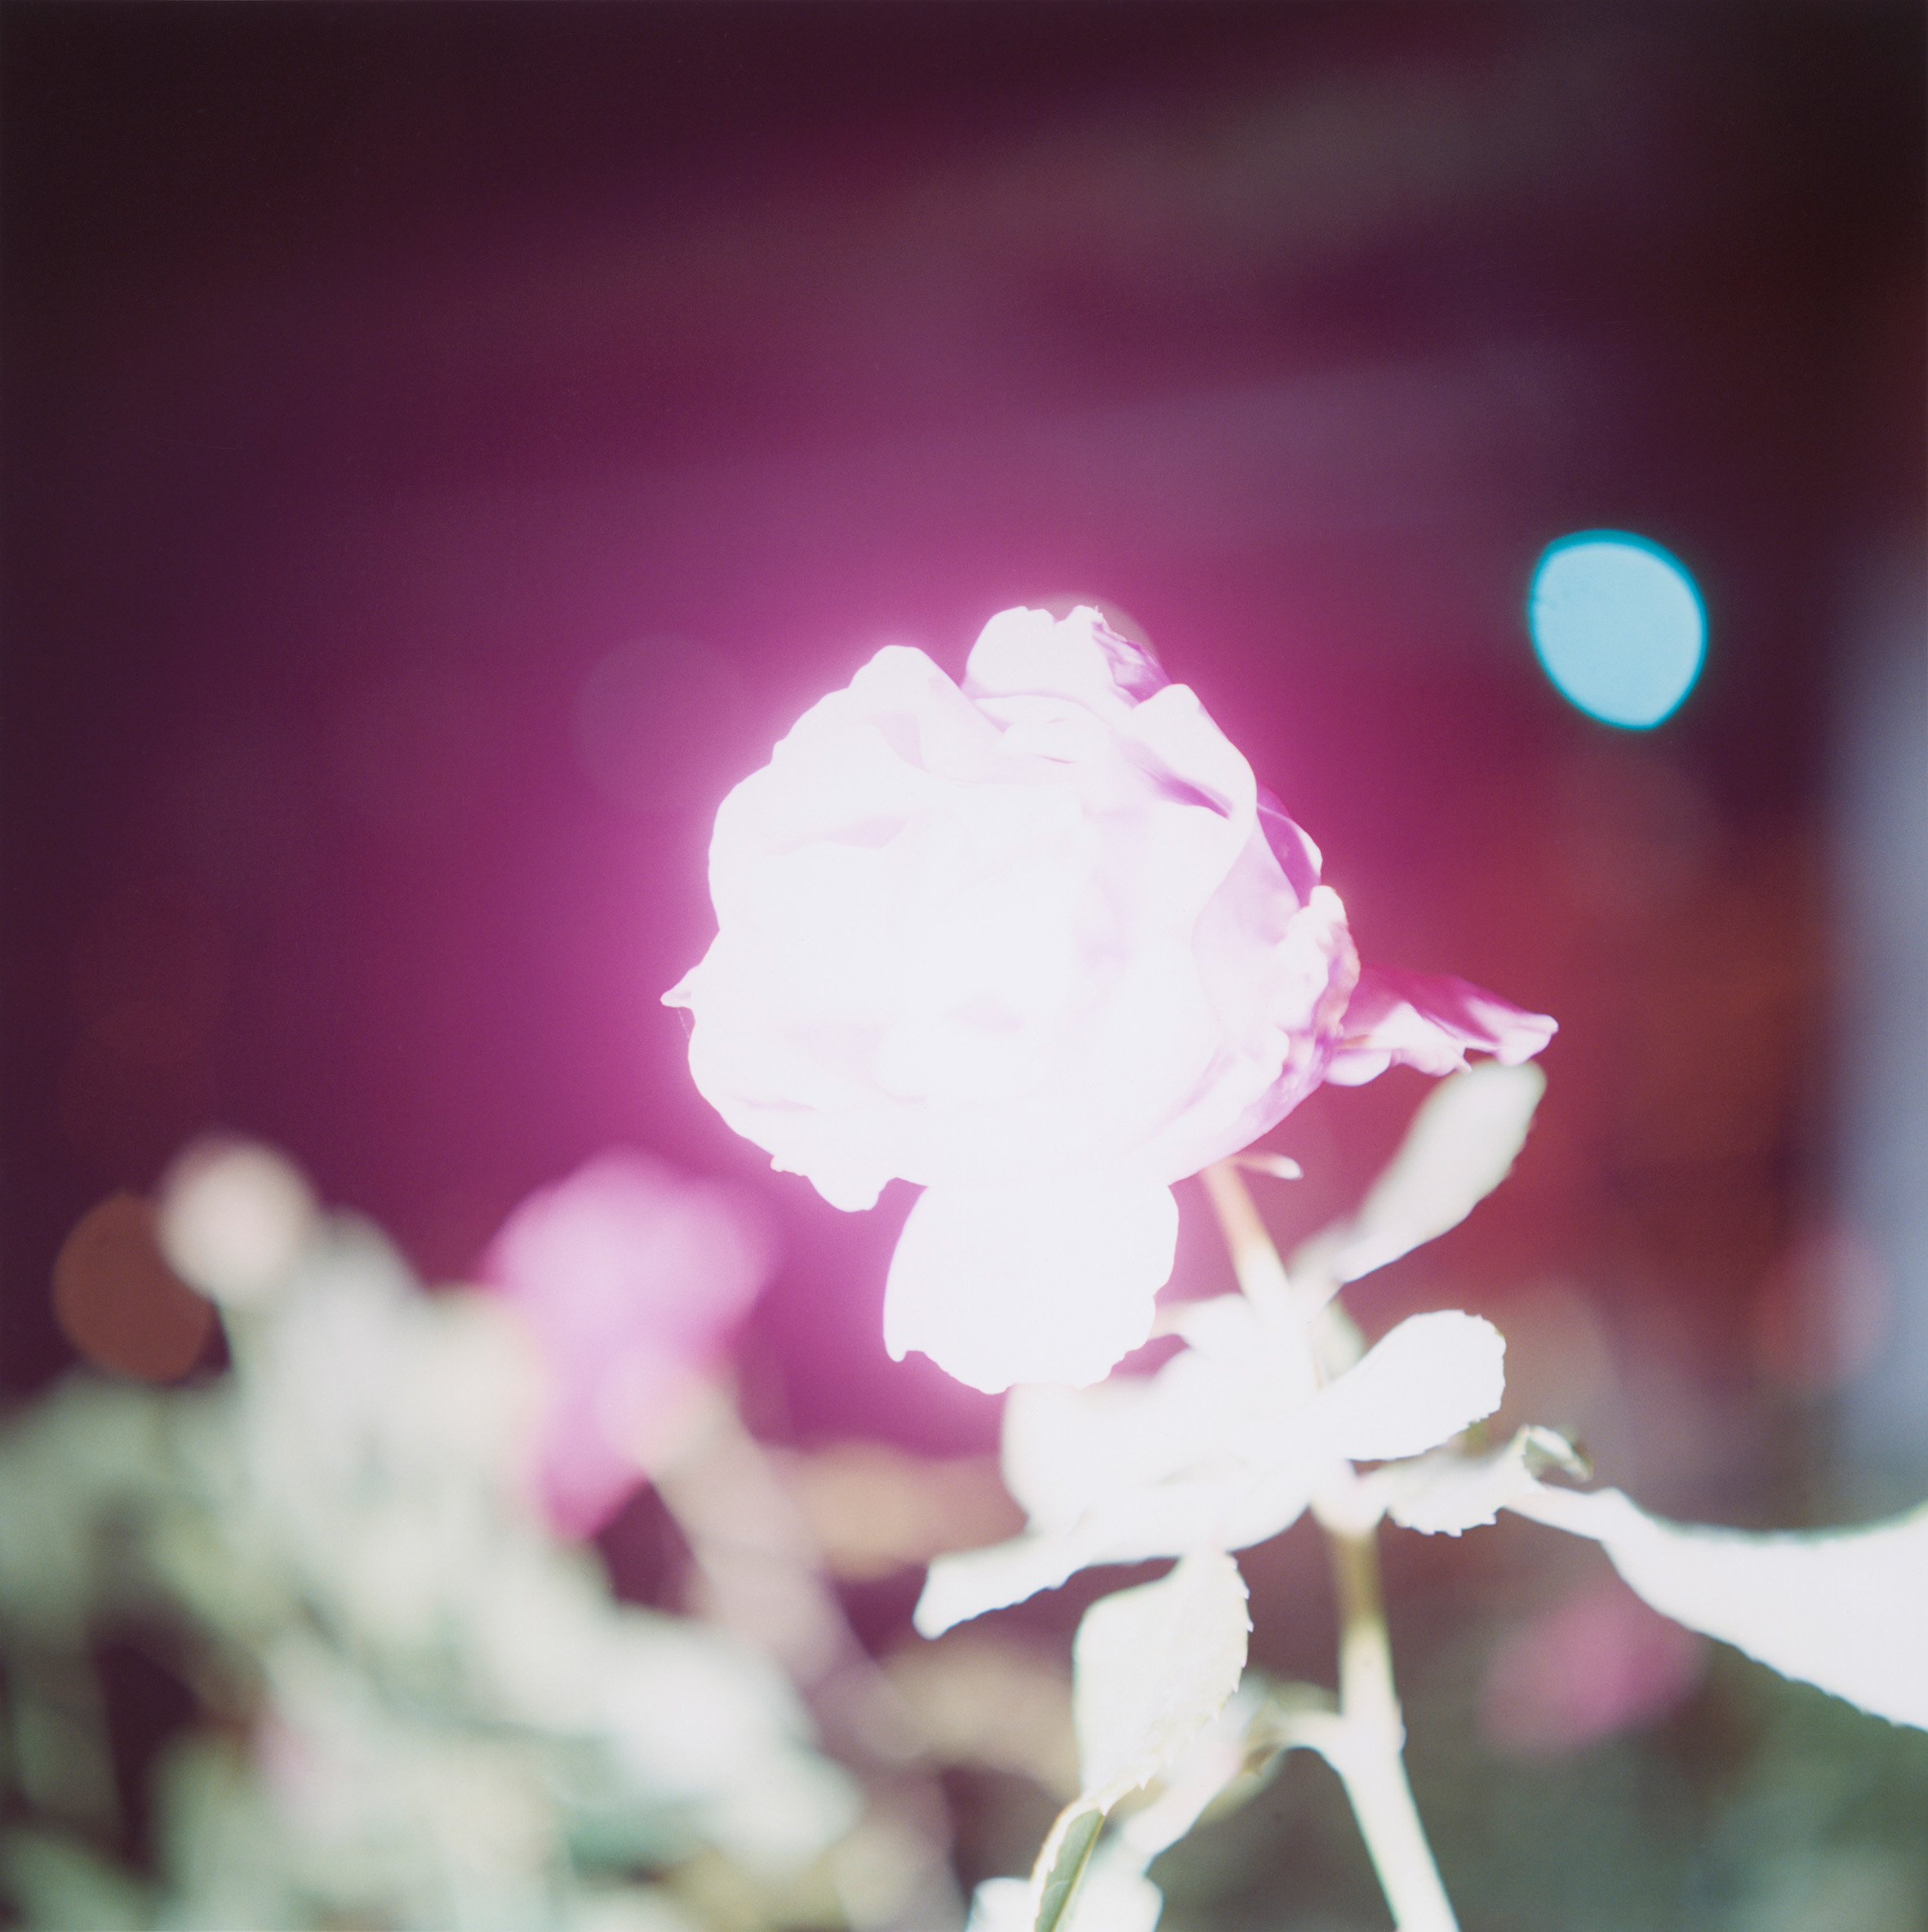 A rose brightly lit under a spotlight.